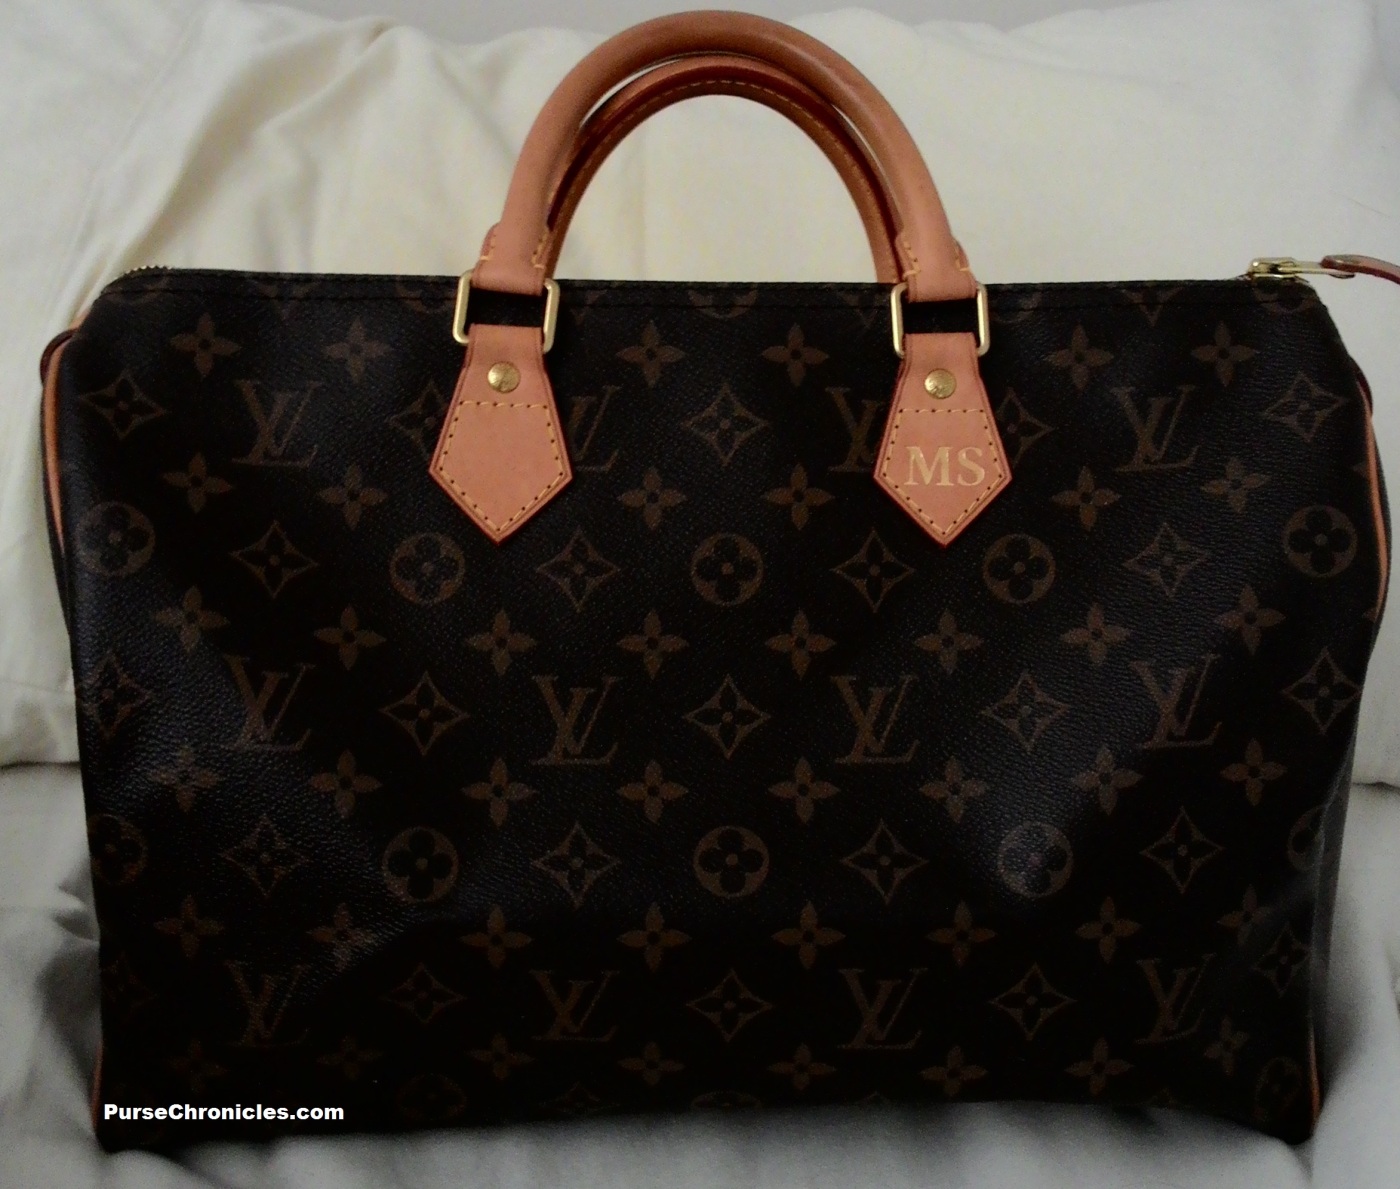 Iconic Bag in Focus: the Louis Vuitton Speedy